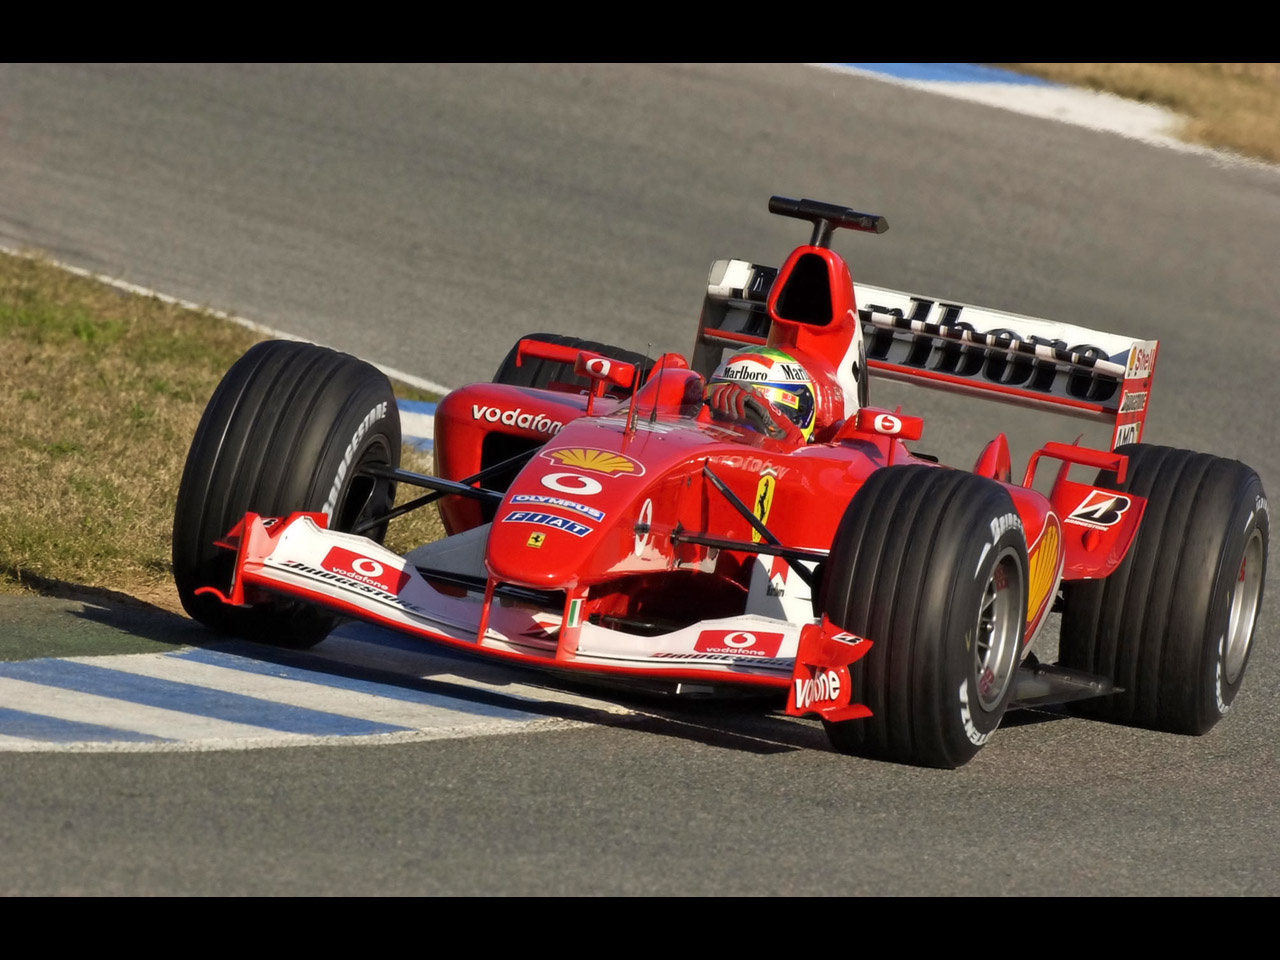 Ferrari F2004 - specs, photos, videos and more on TopWorldAuto